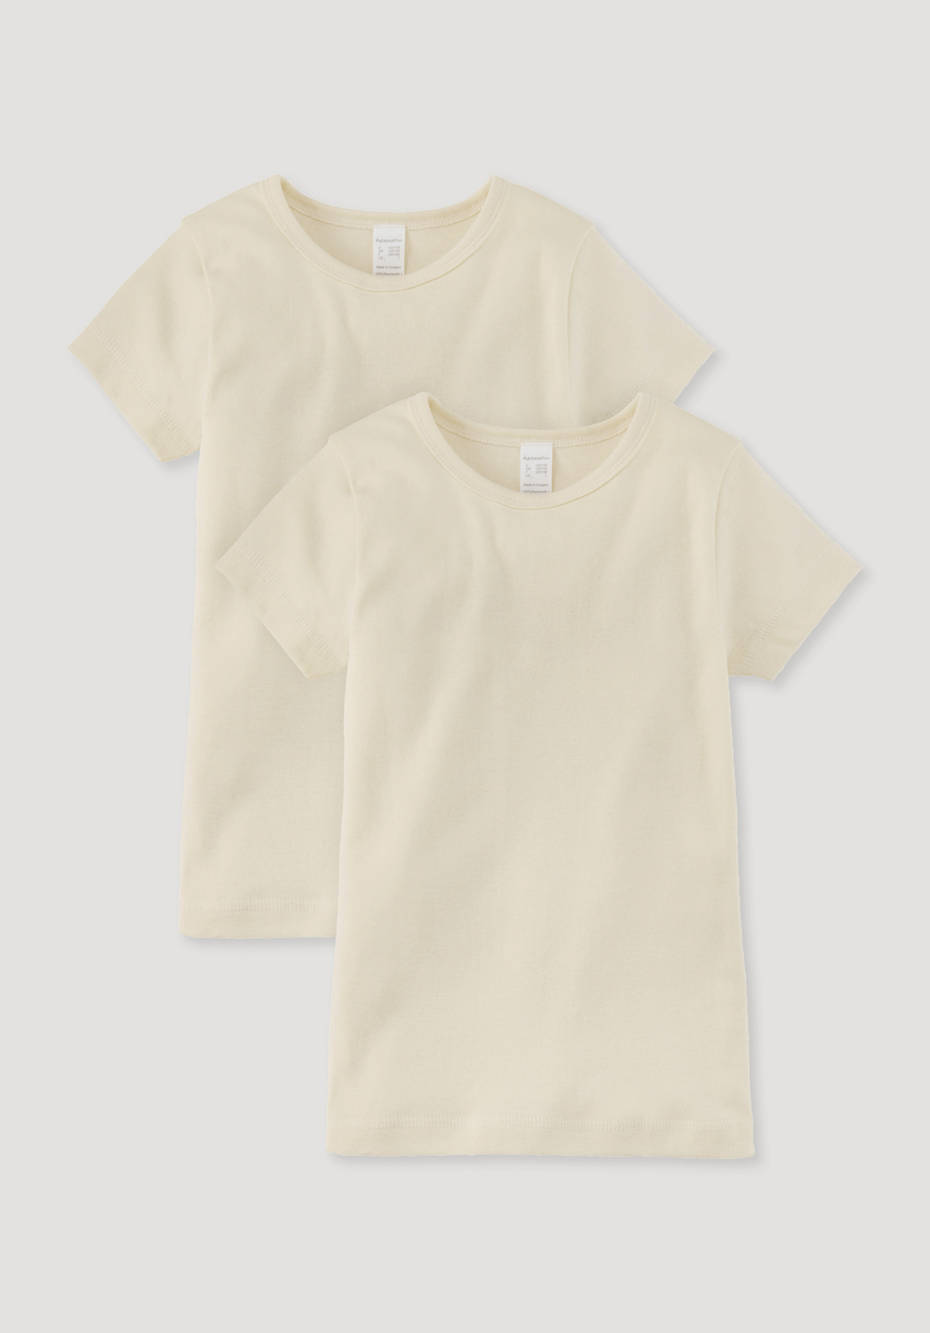 Short-sleeved shirt PureNature set of 2 made of pure organic cotton